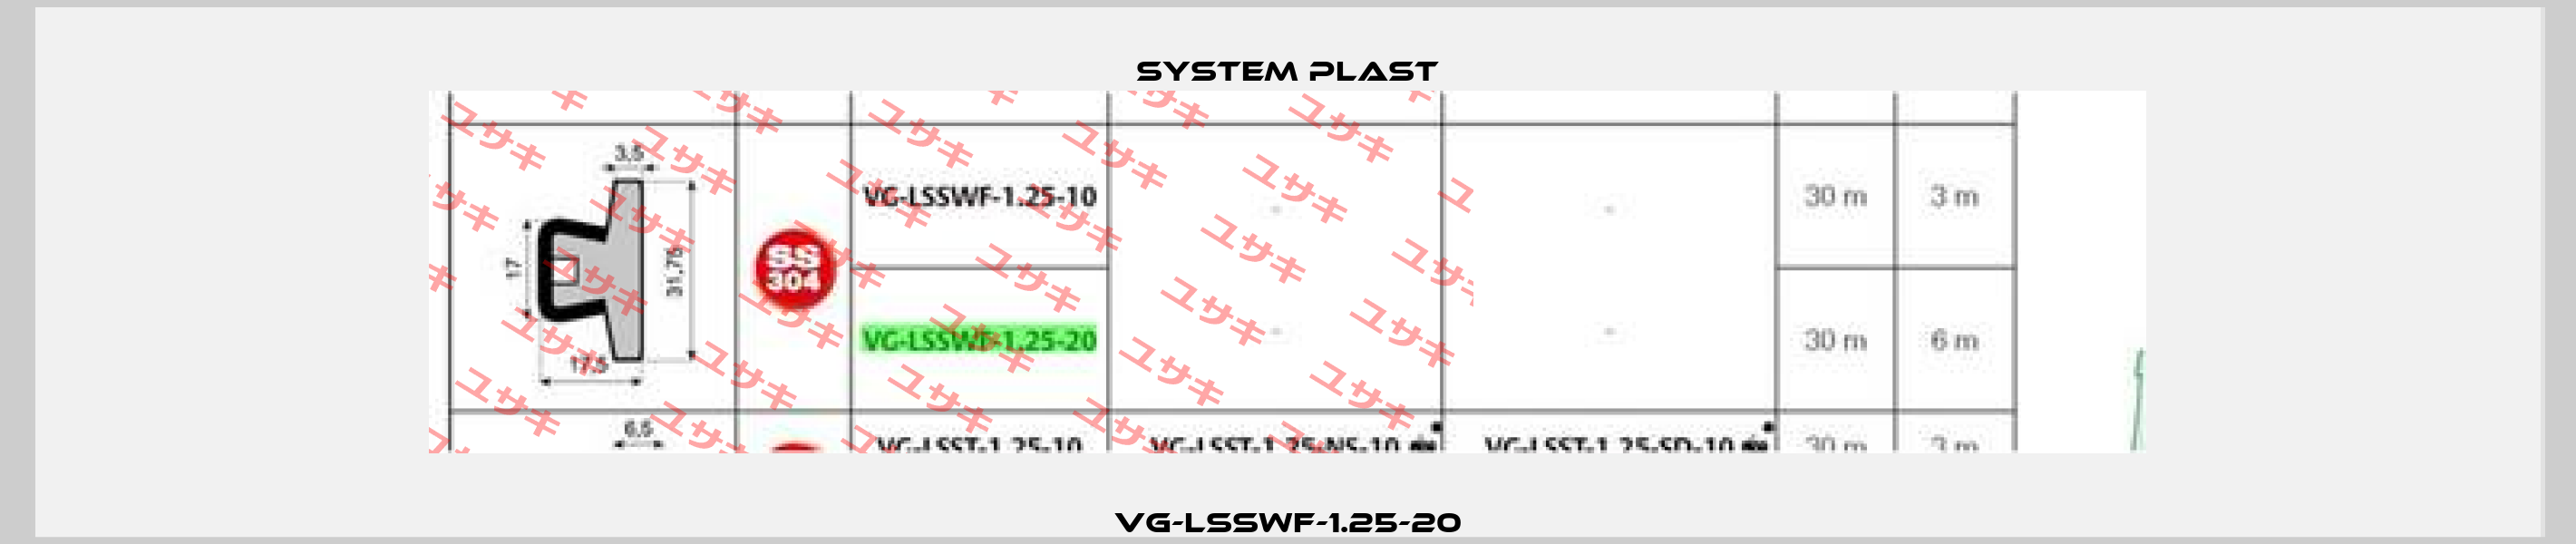 VG-LSSWF-1.25-20 System Plast